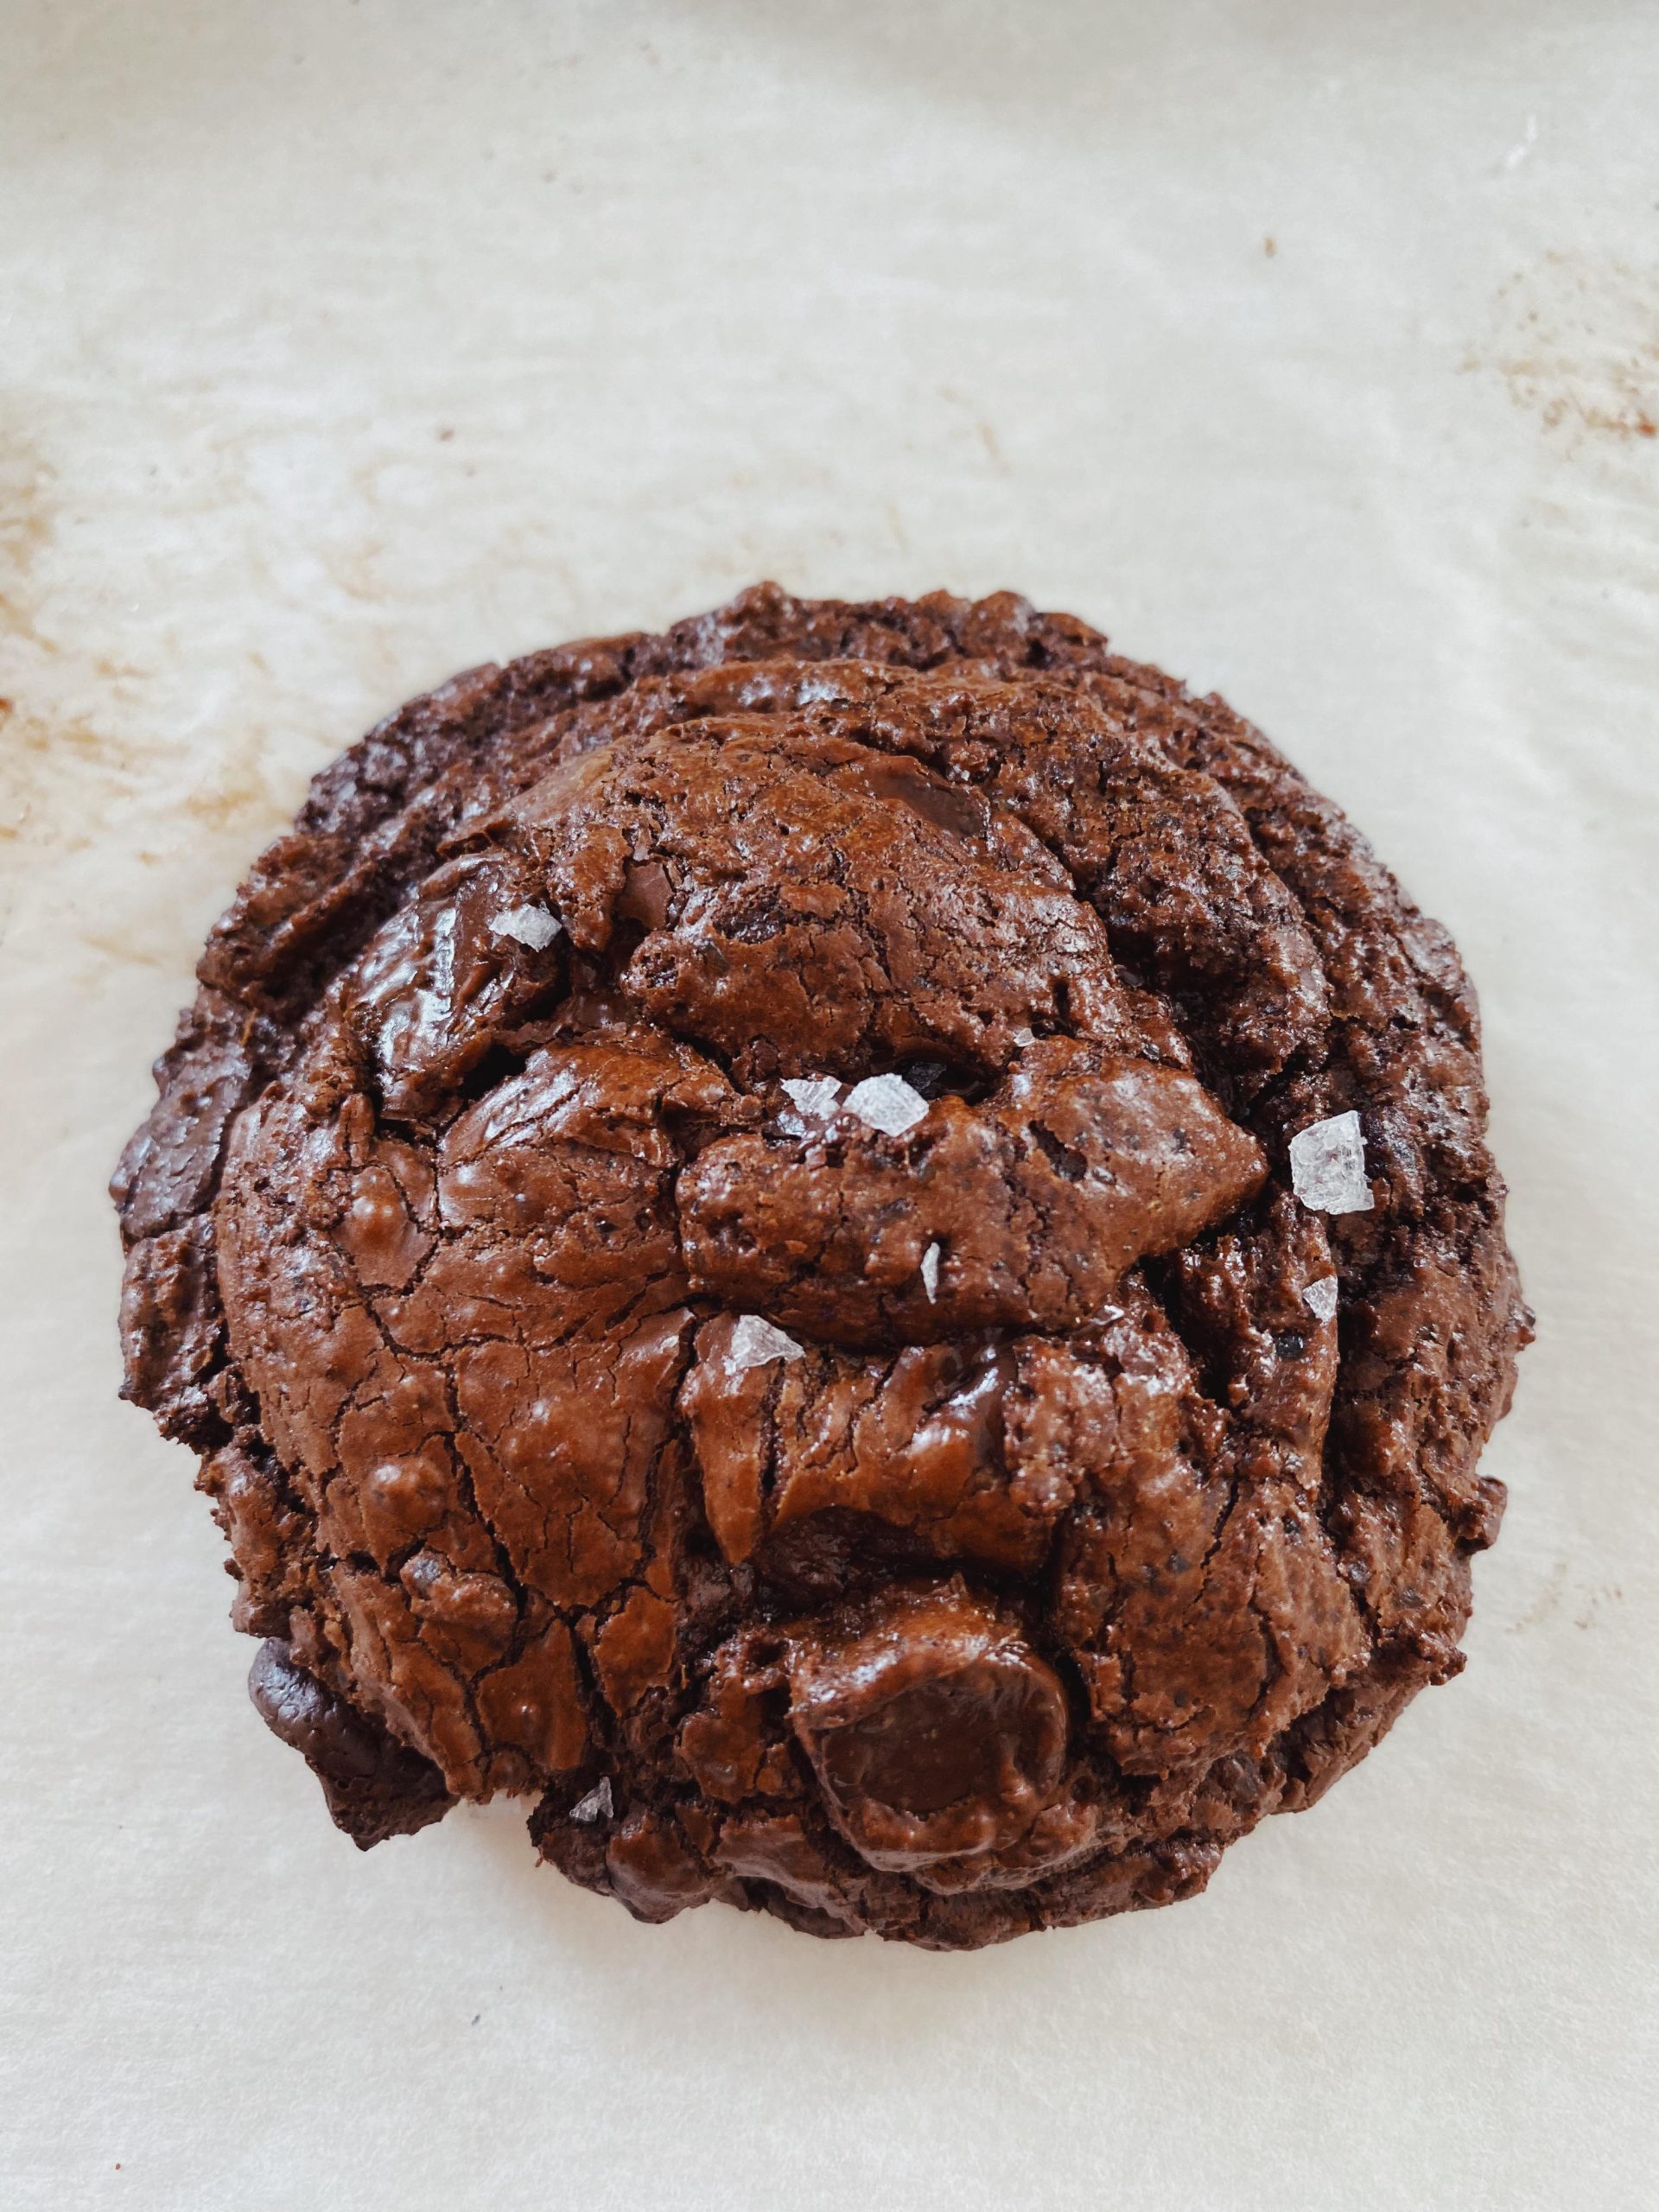 Glutenfri brownie cookies